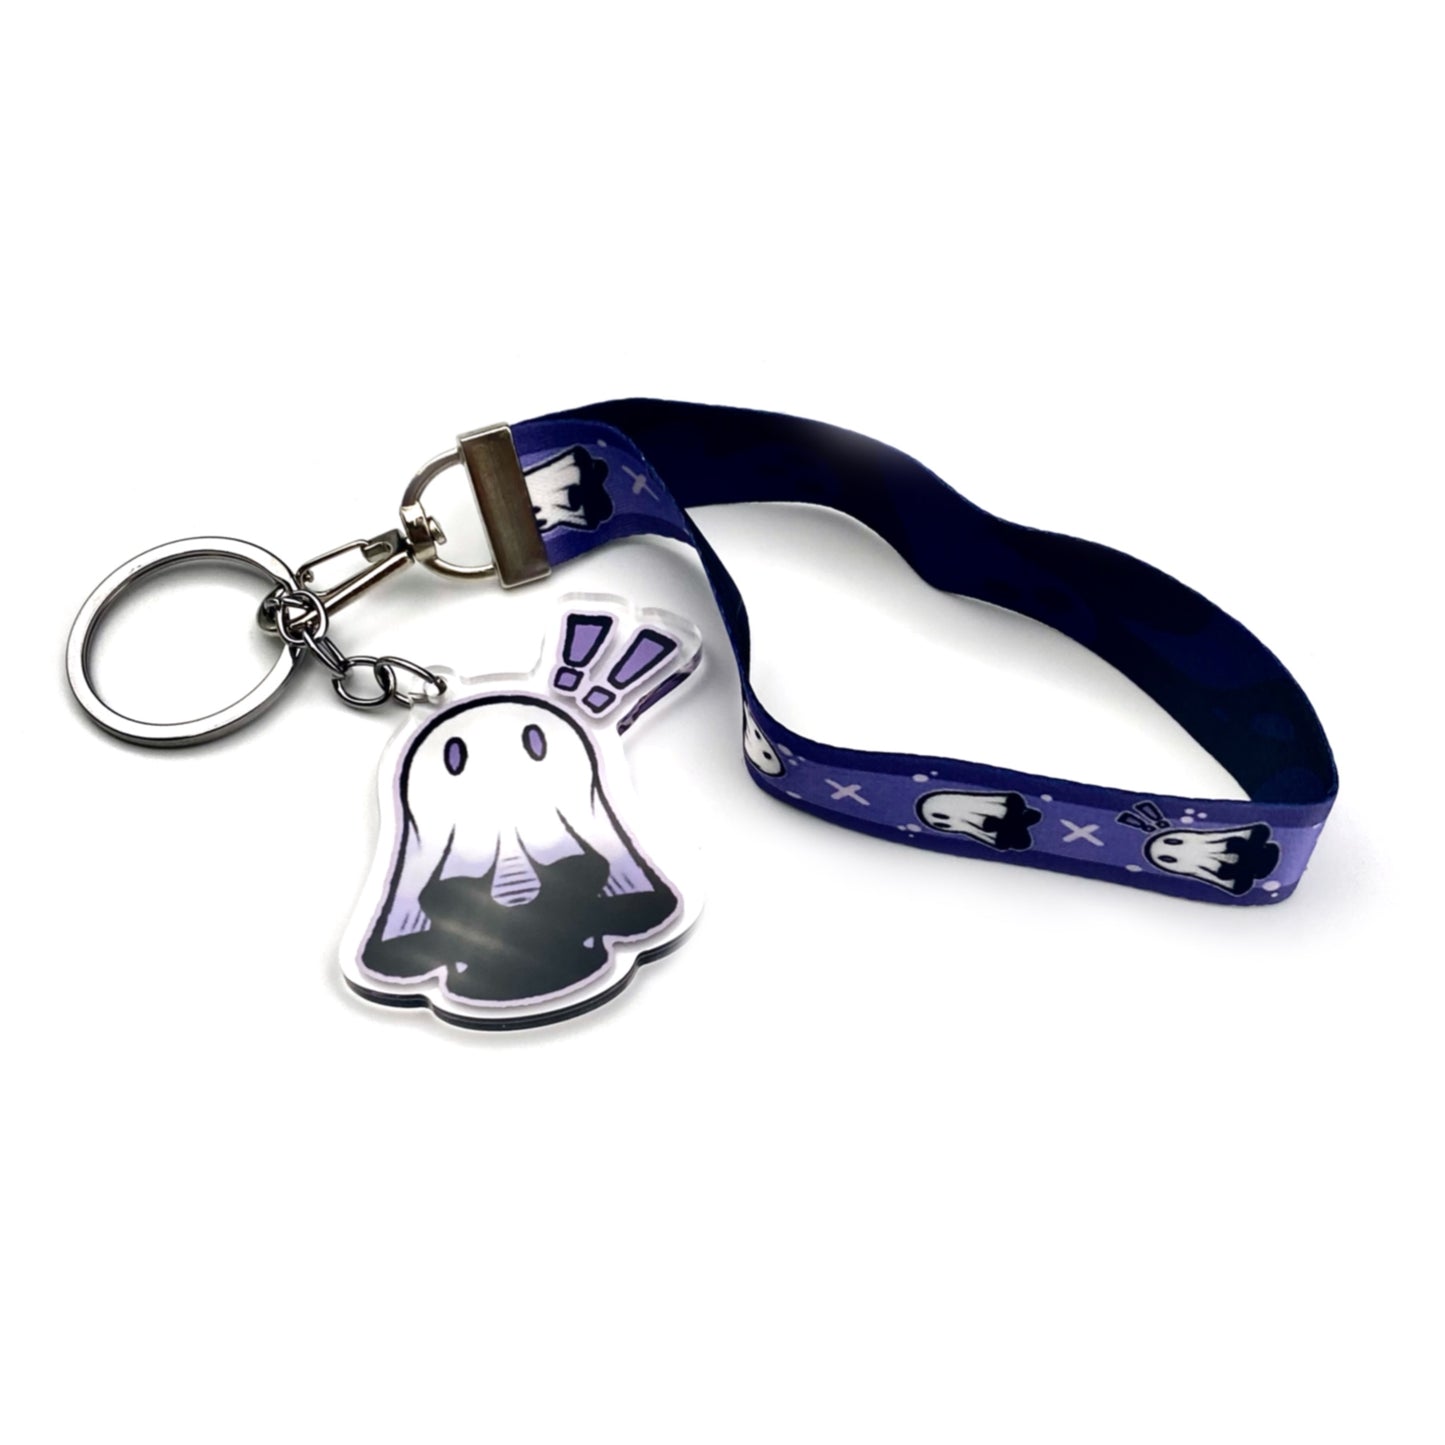 Lilac Ghosties Keychain +Wristlet Lanyard Set